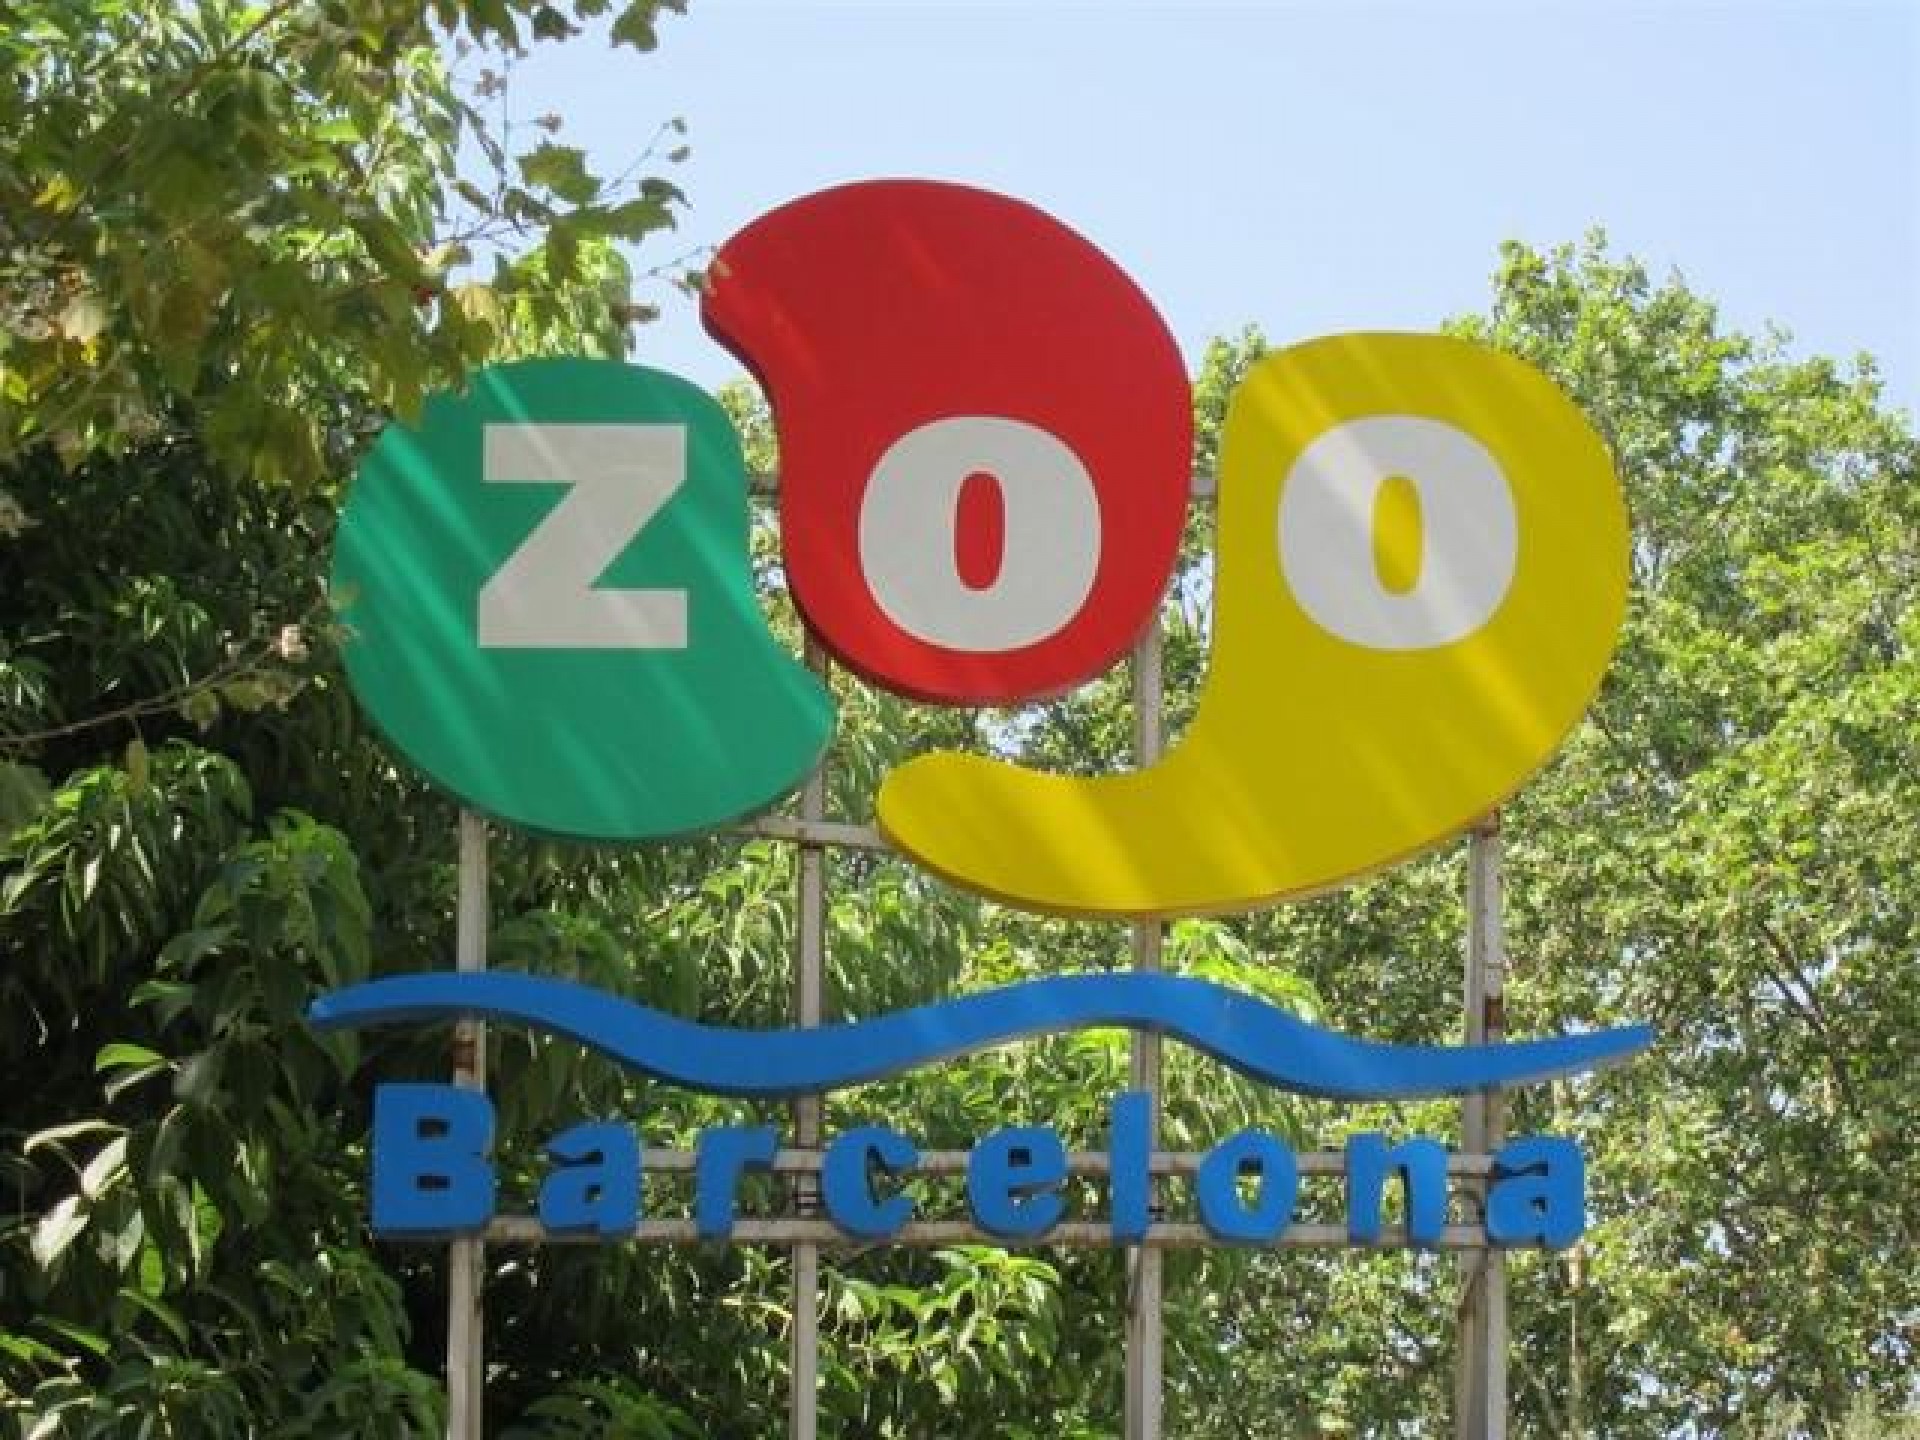 BCN Zoo